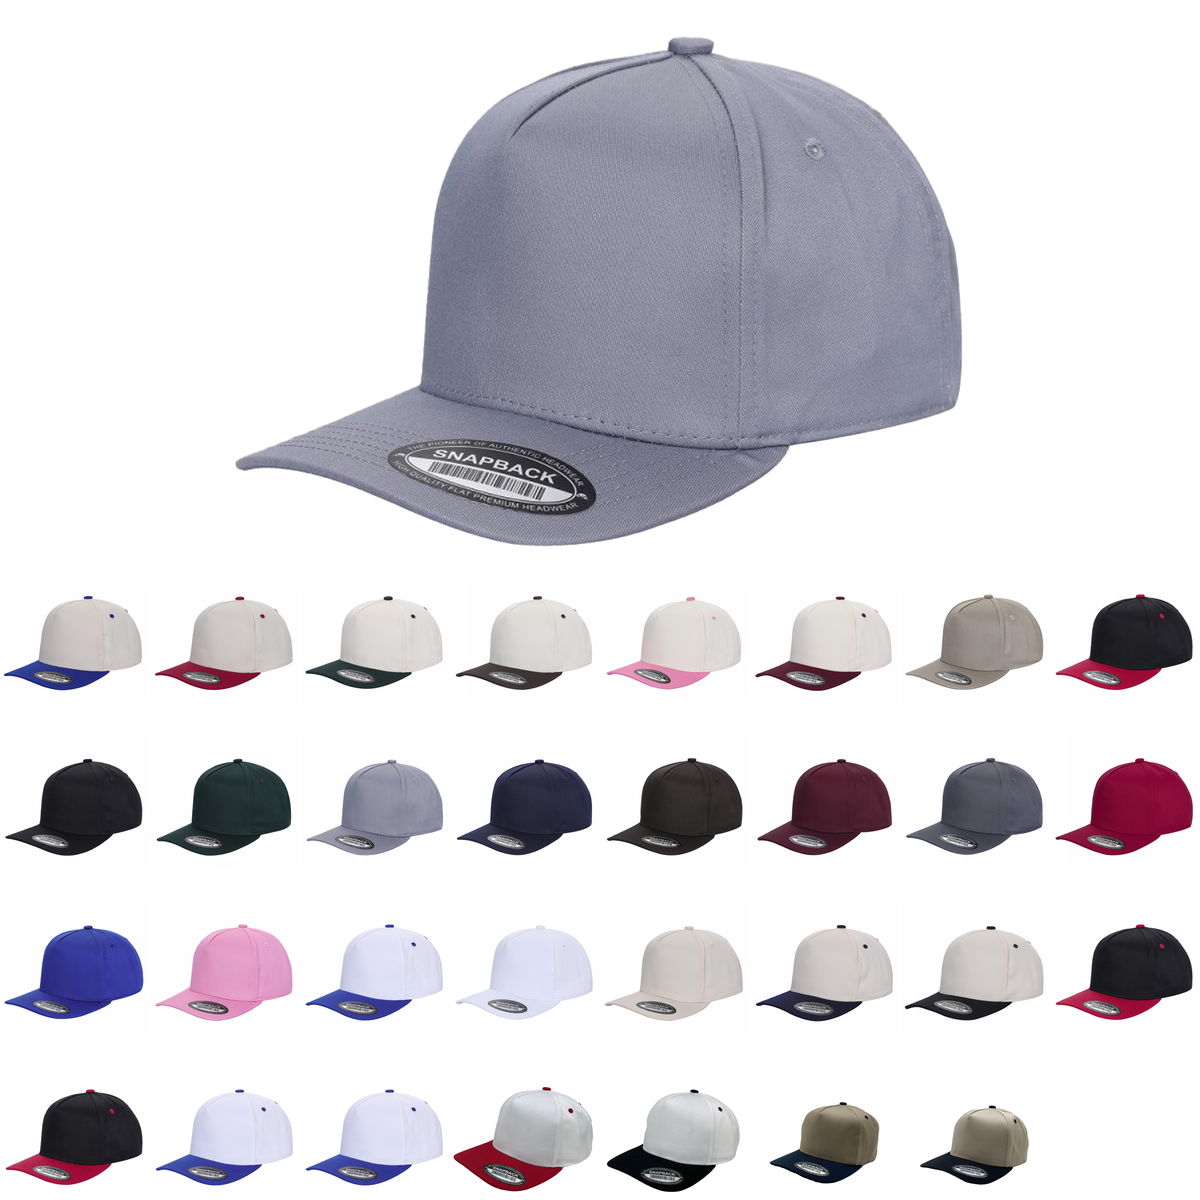 Cap Unbranded 5 Blank The – Park Baseball Wholesale Hat, Panel